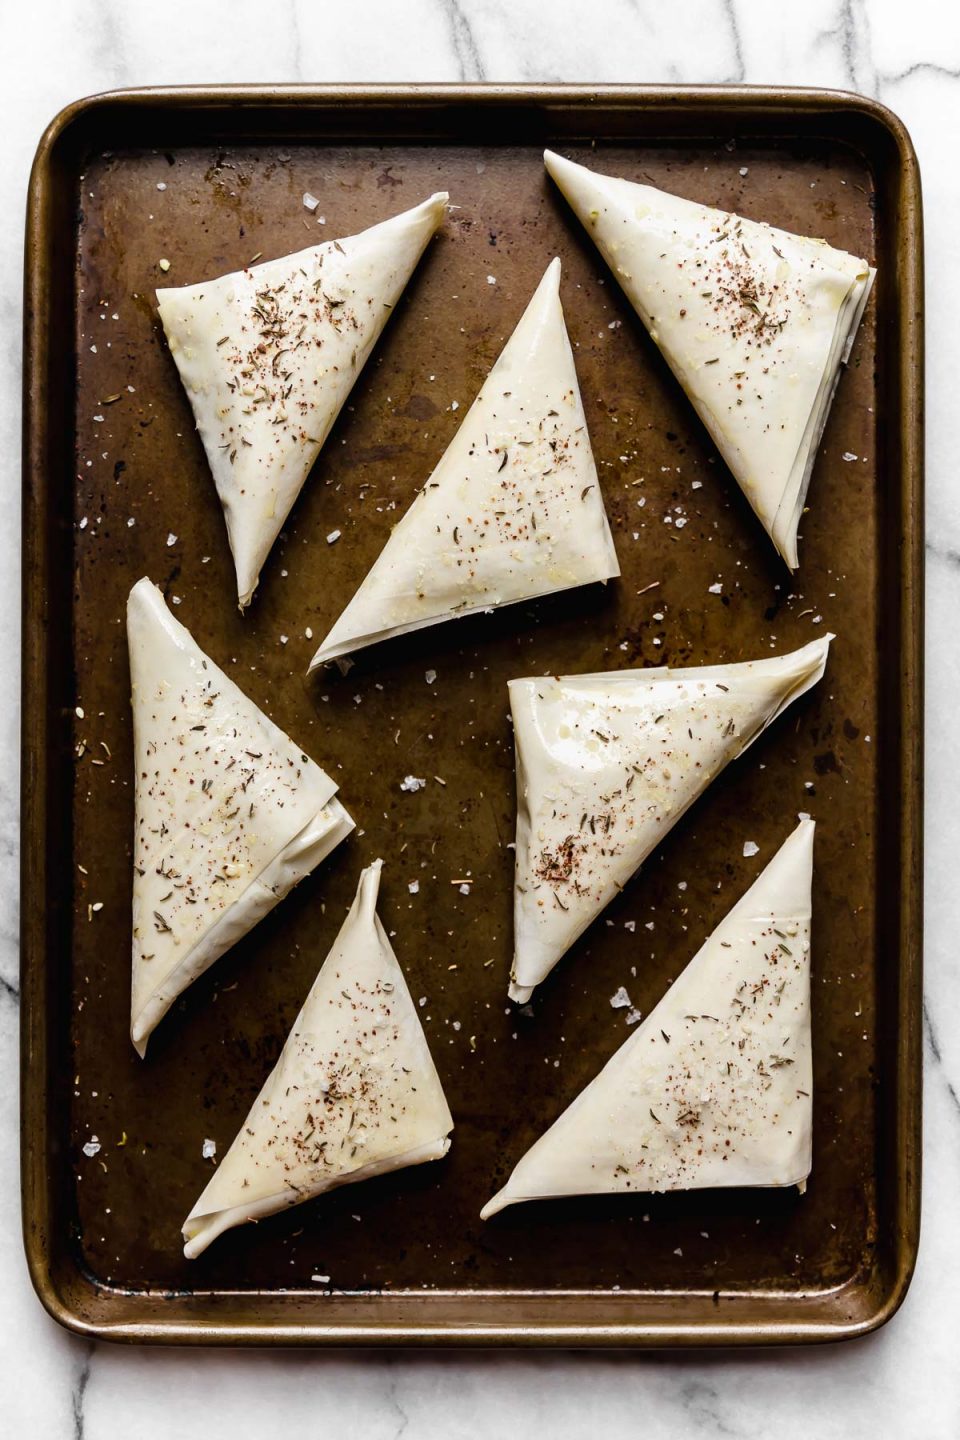 Unbaked spanakopita triangles arranged on a baking sheet.